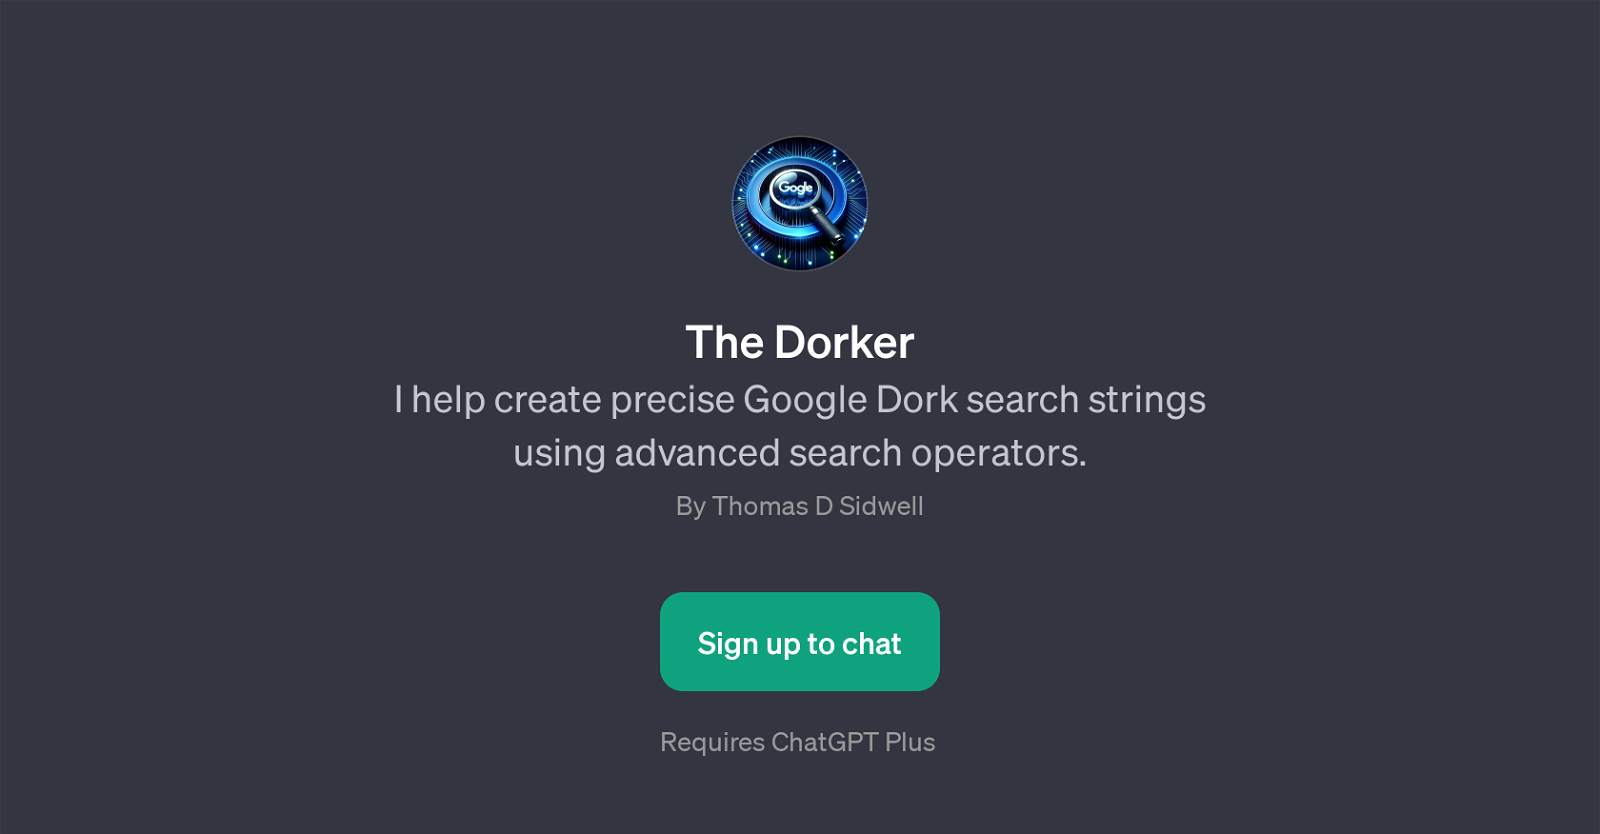 The Dorker website